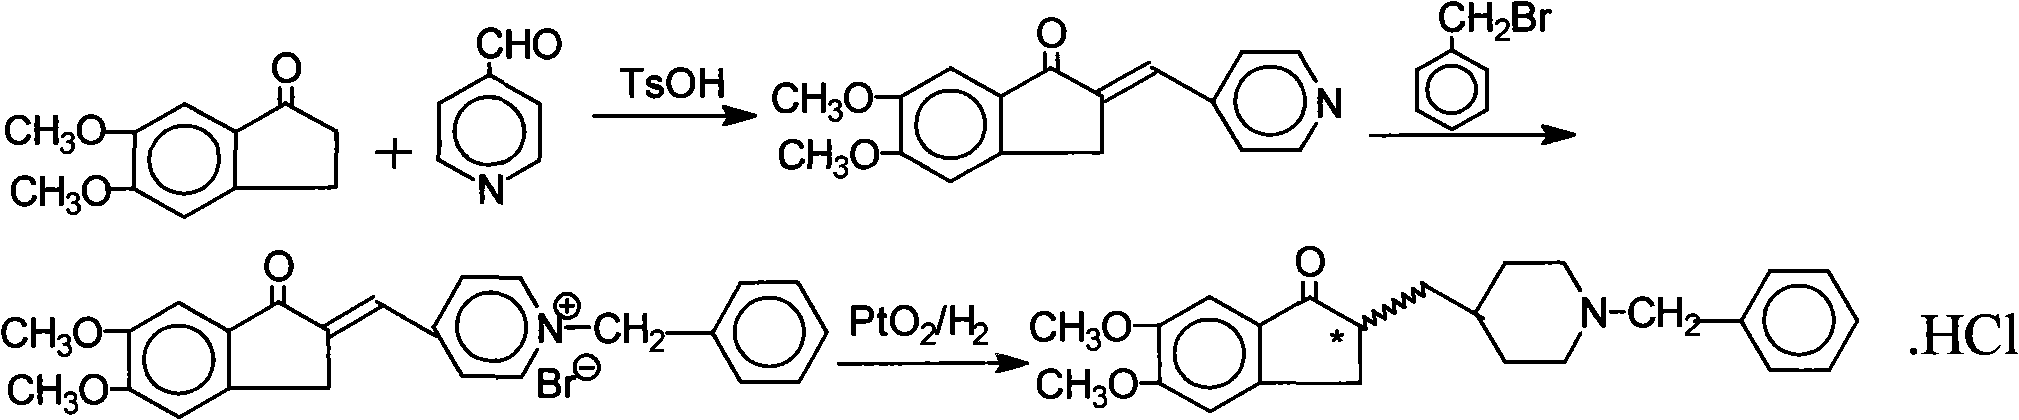 Method for preparing donepezil hydrochloride